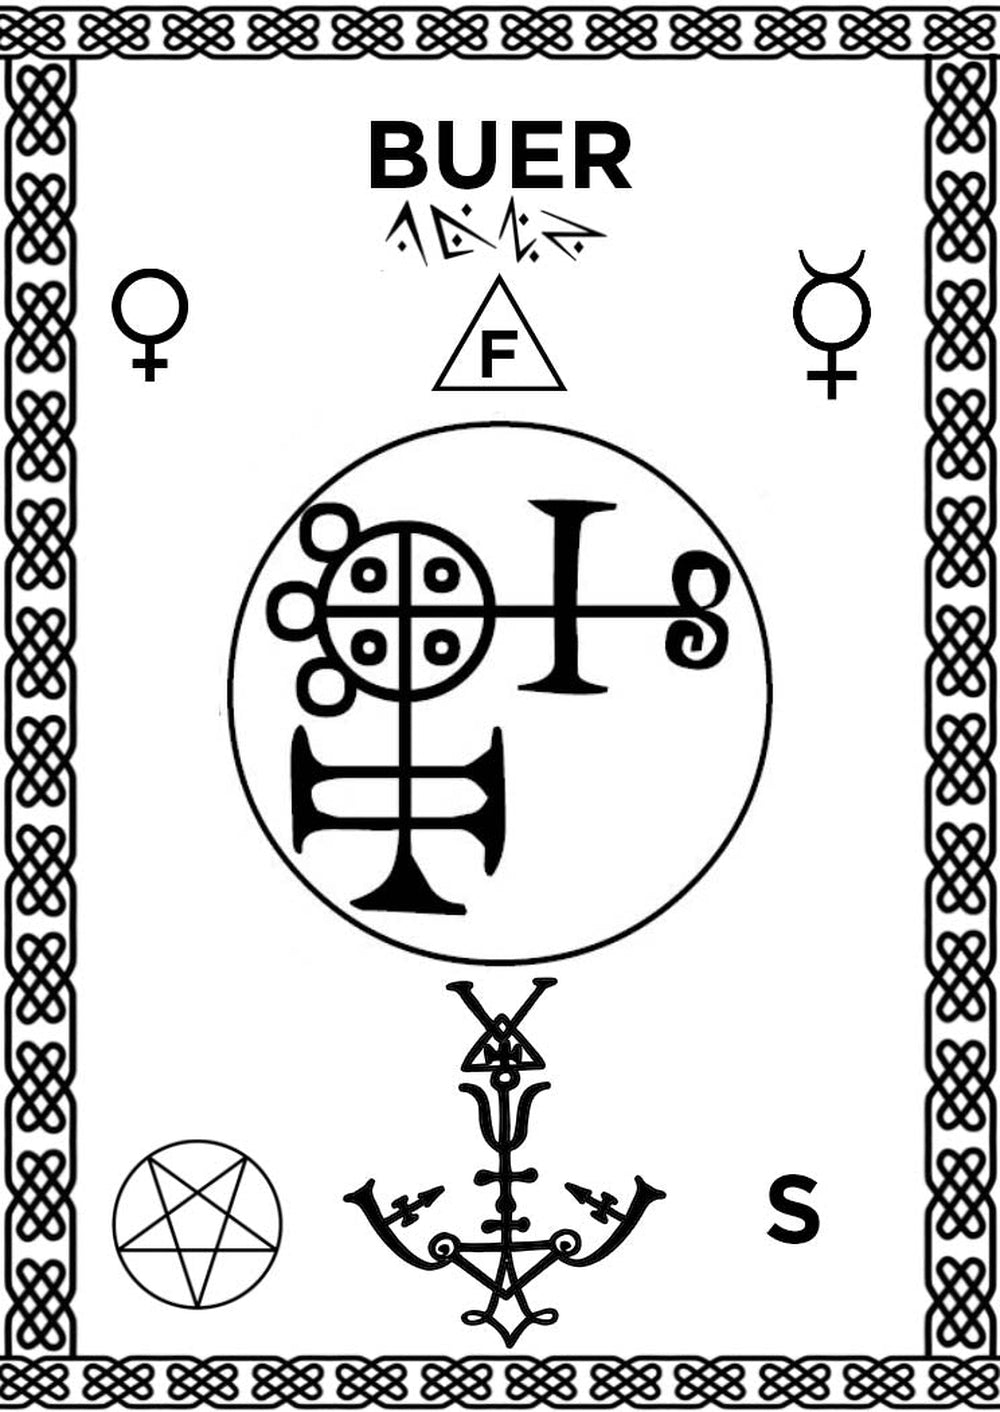 Invocation-Alignment-Pad-with-the-Siglo-de-Buer-por-hejma-altaro-Witchcraft-2